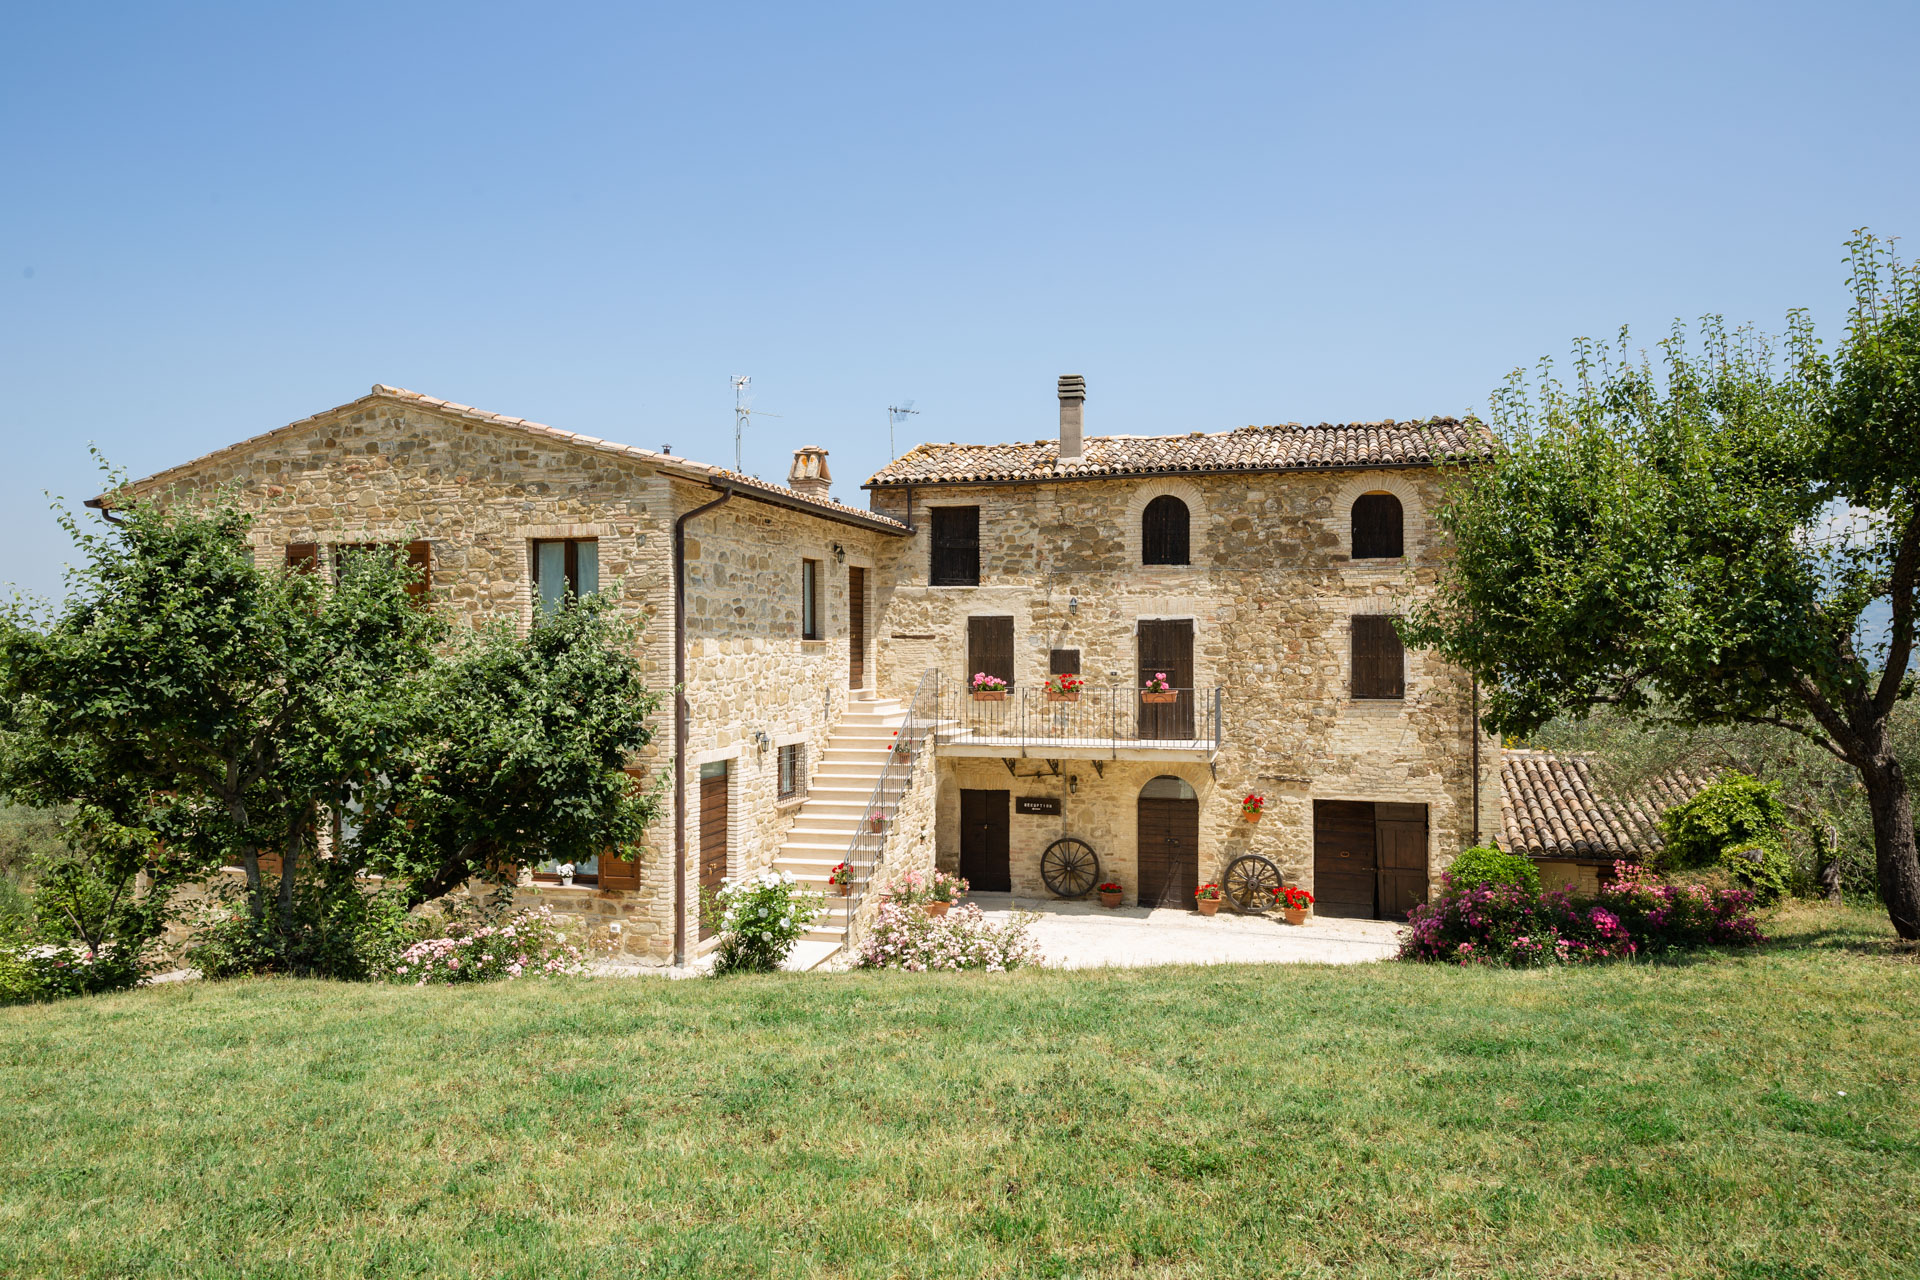 For sale cottage in quiet zone Cannara Umbria